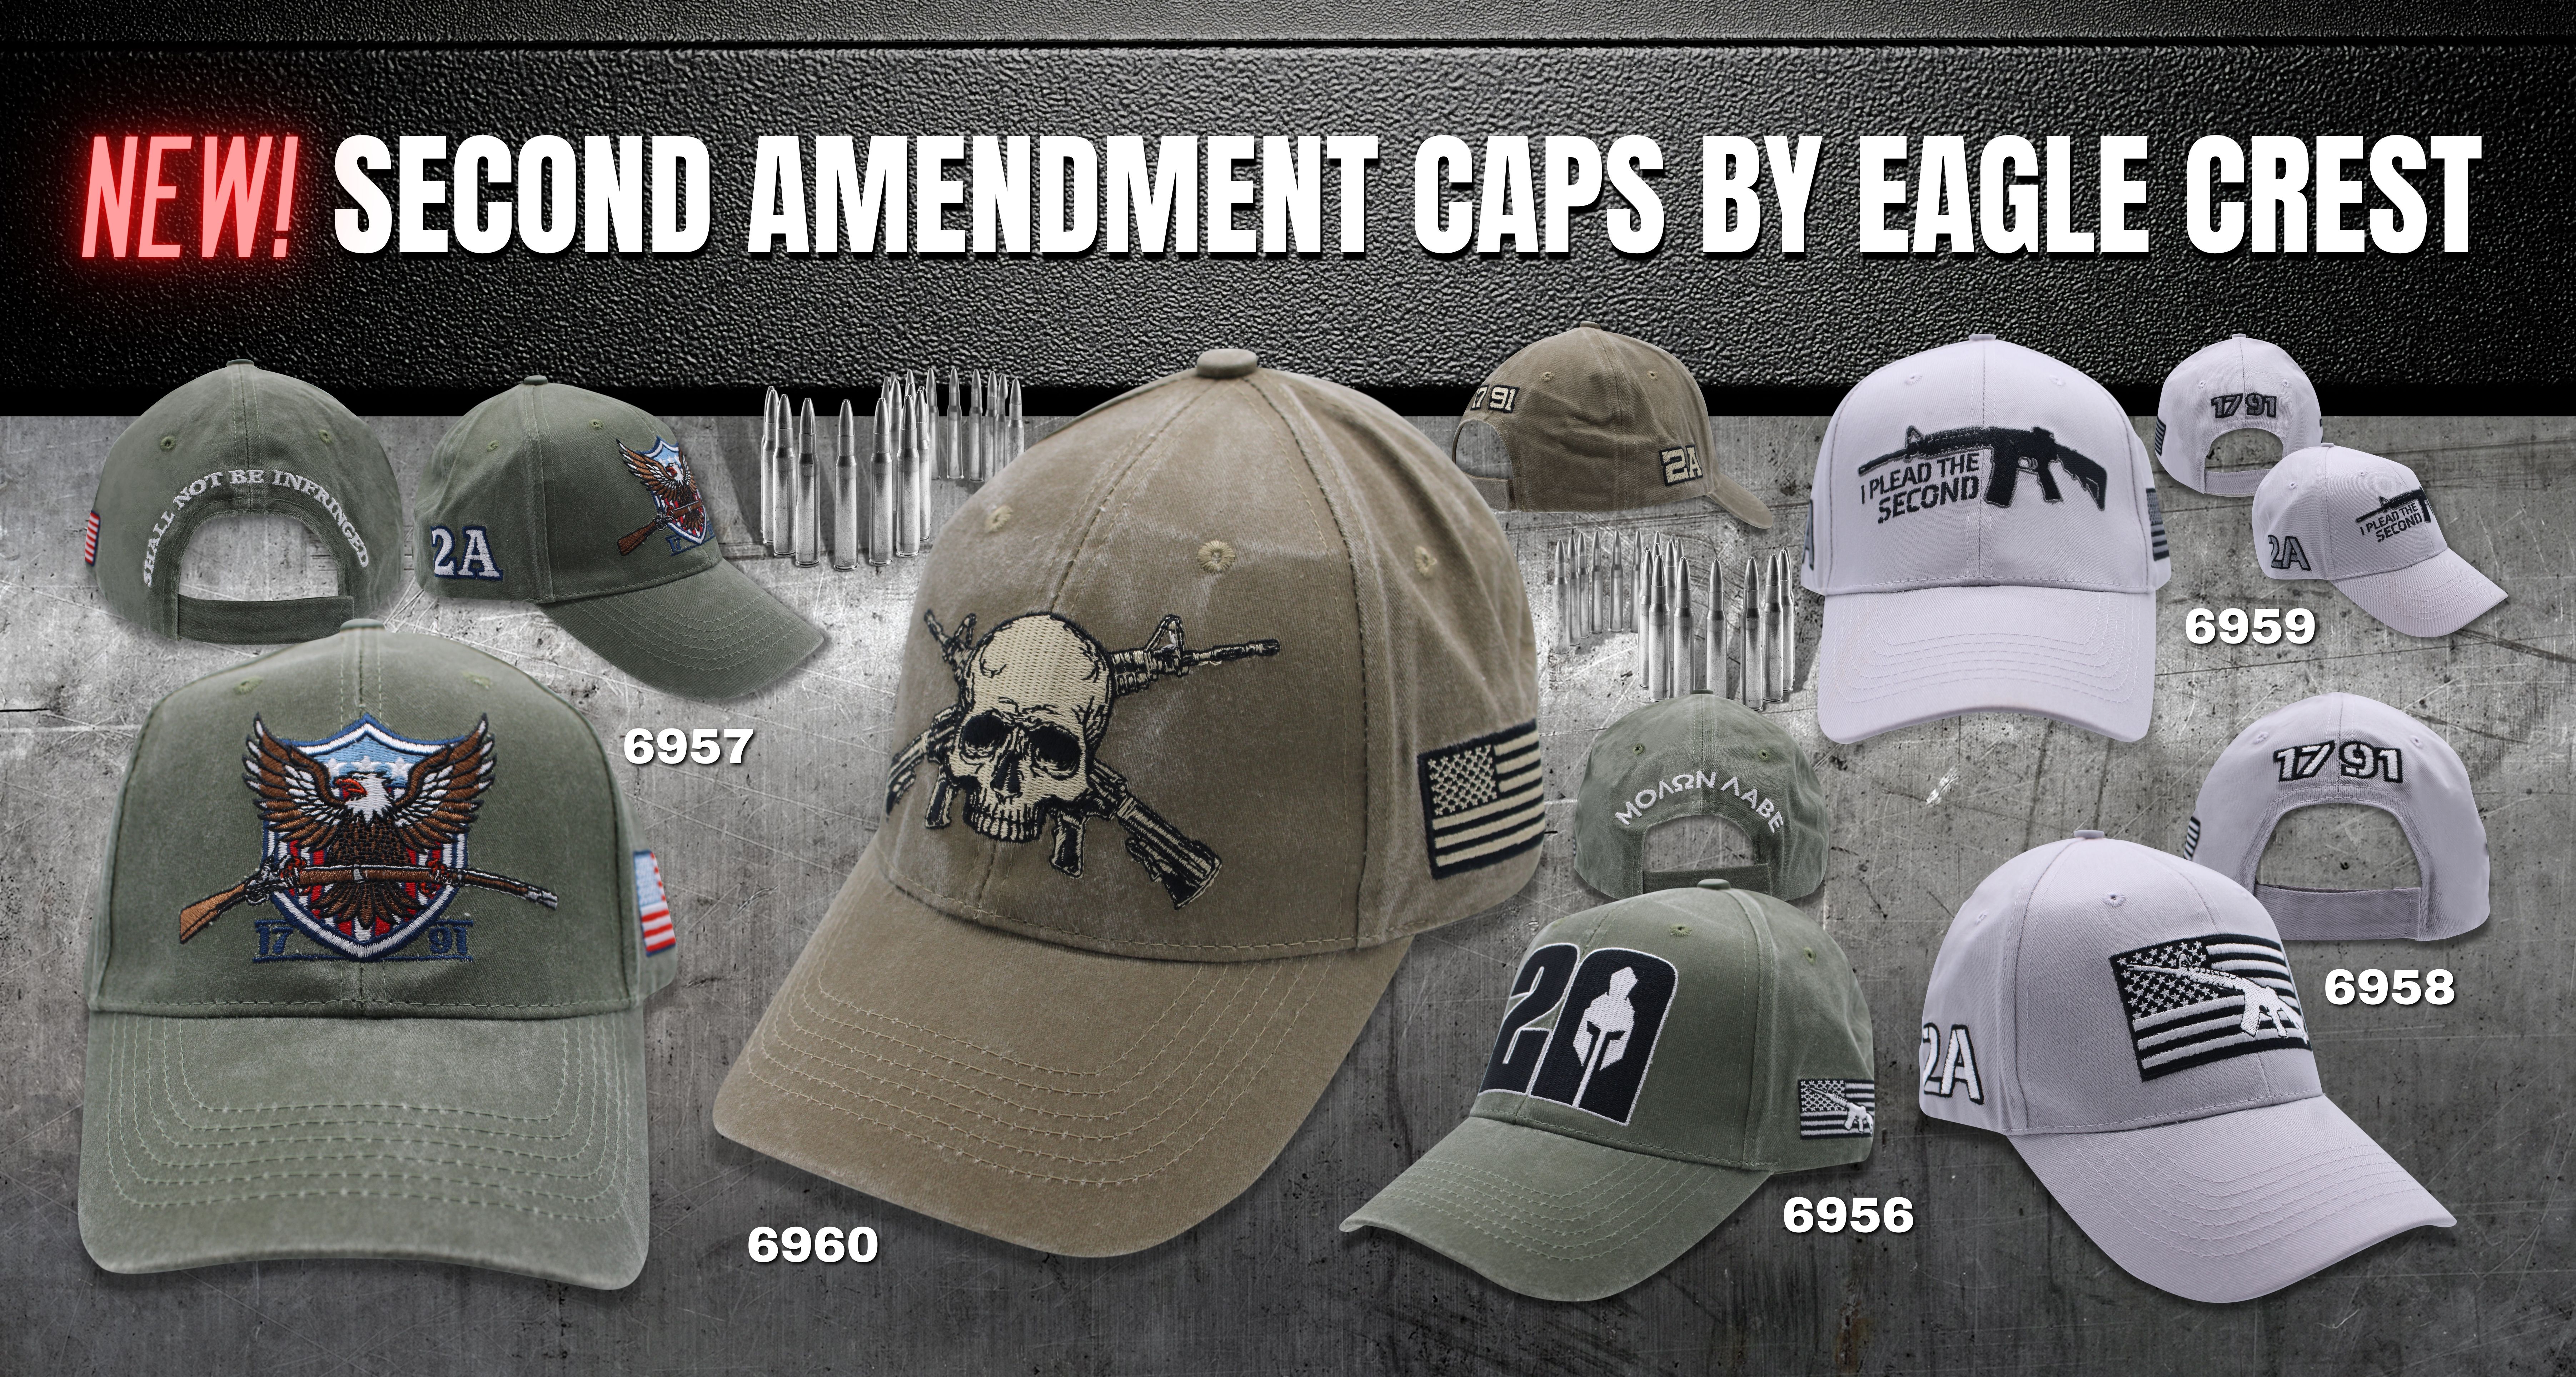 NEW Second Amendment Caps by Eagle Crest